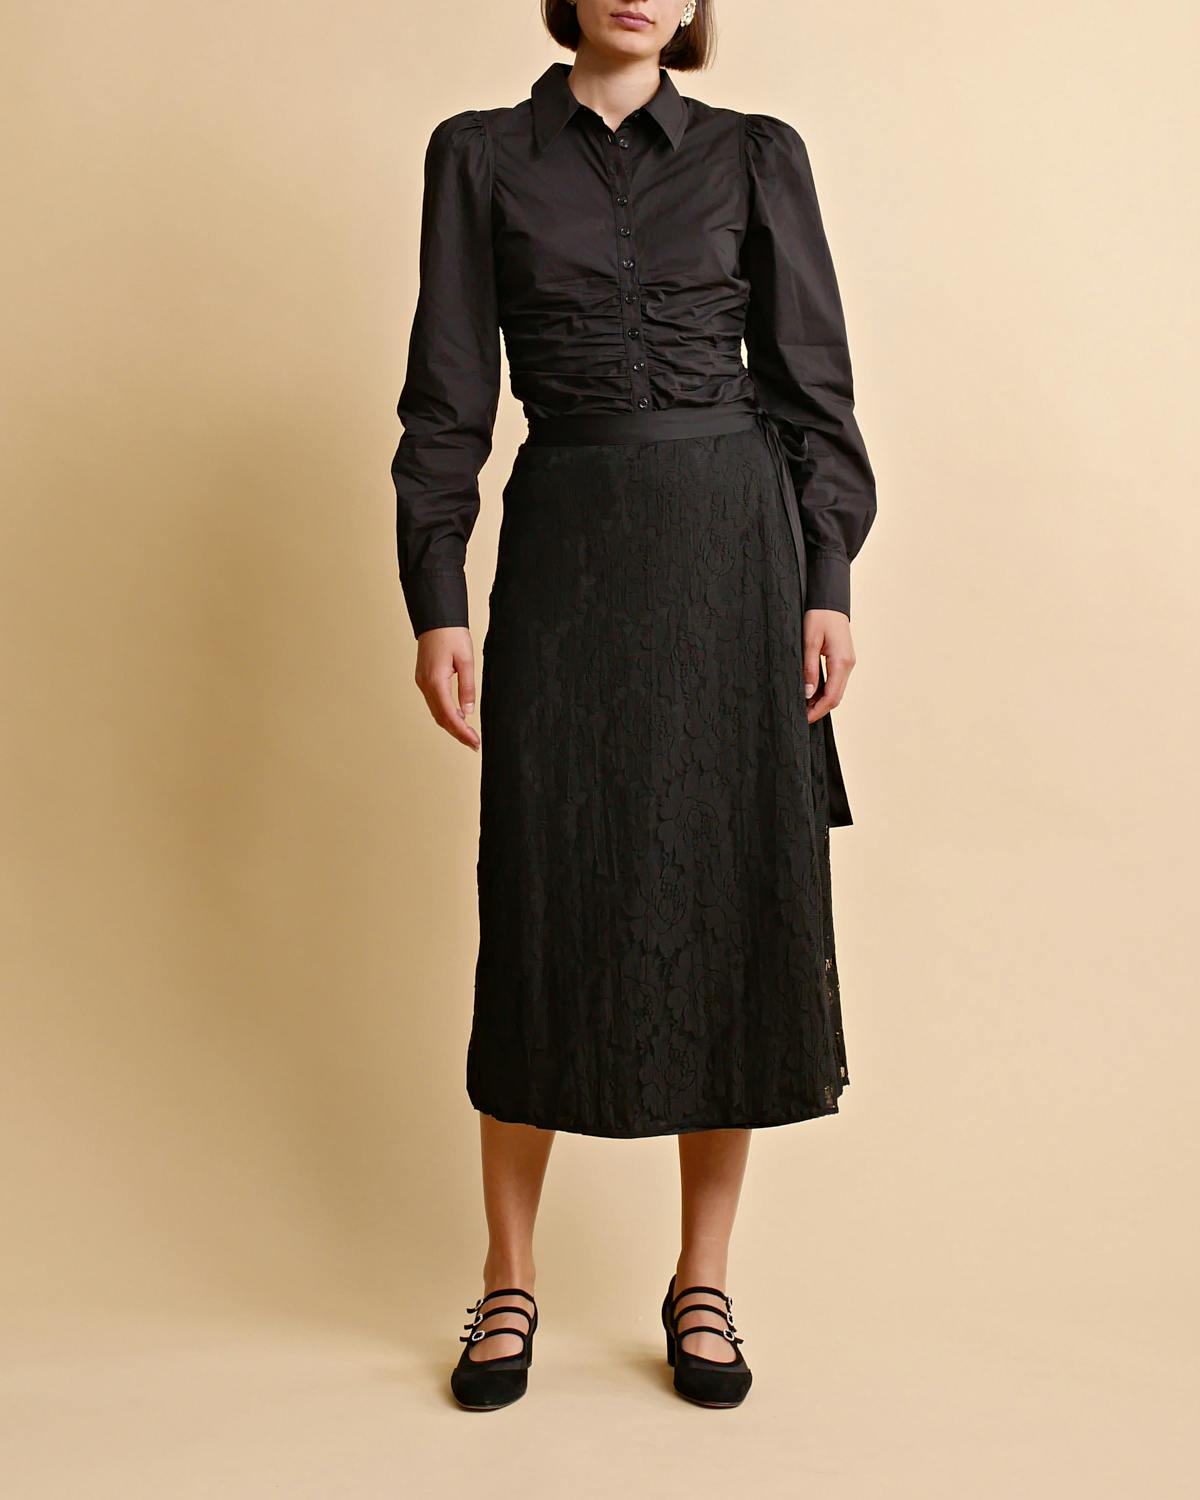 Lace Skirt, Black. Image #1